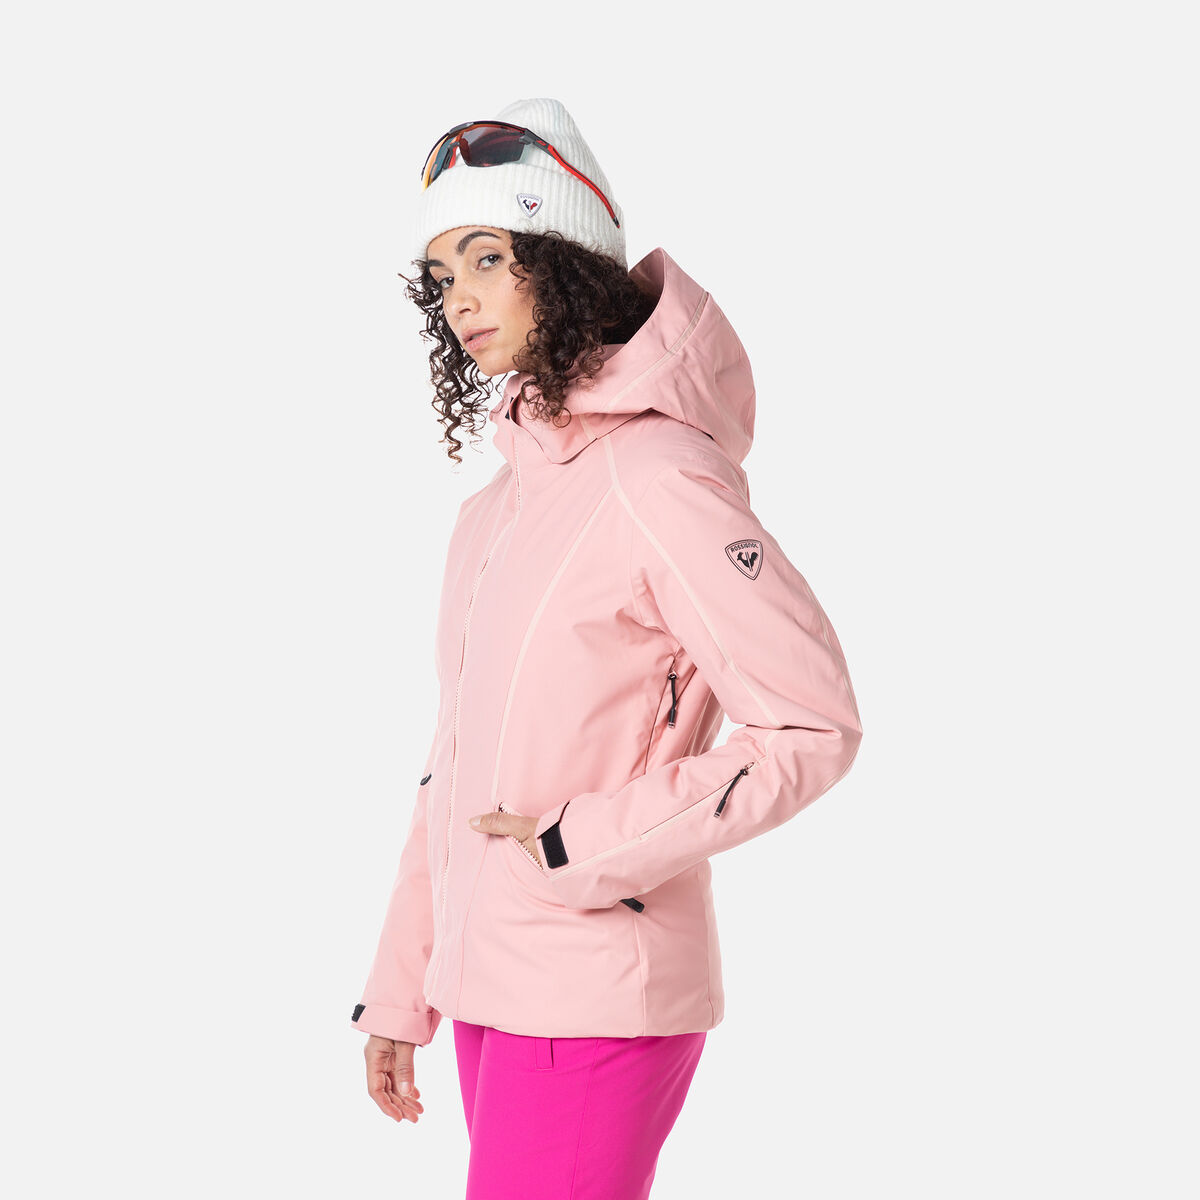 Women's Flat Ski Jacket, Ski & snowboard jackets